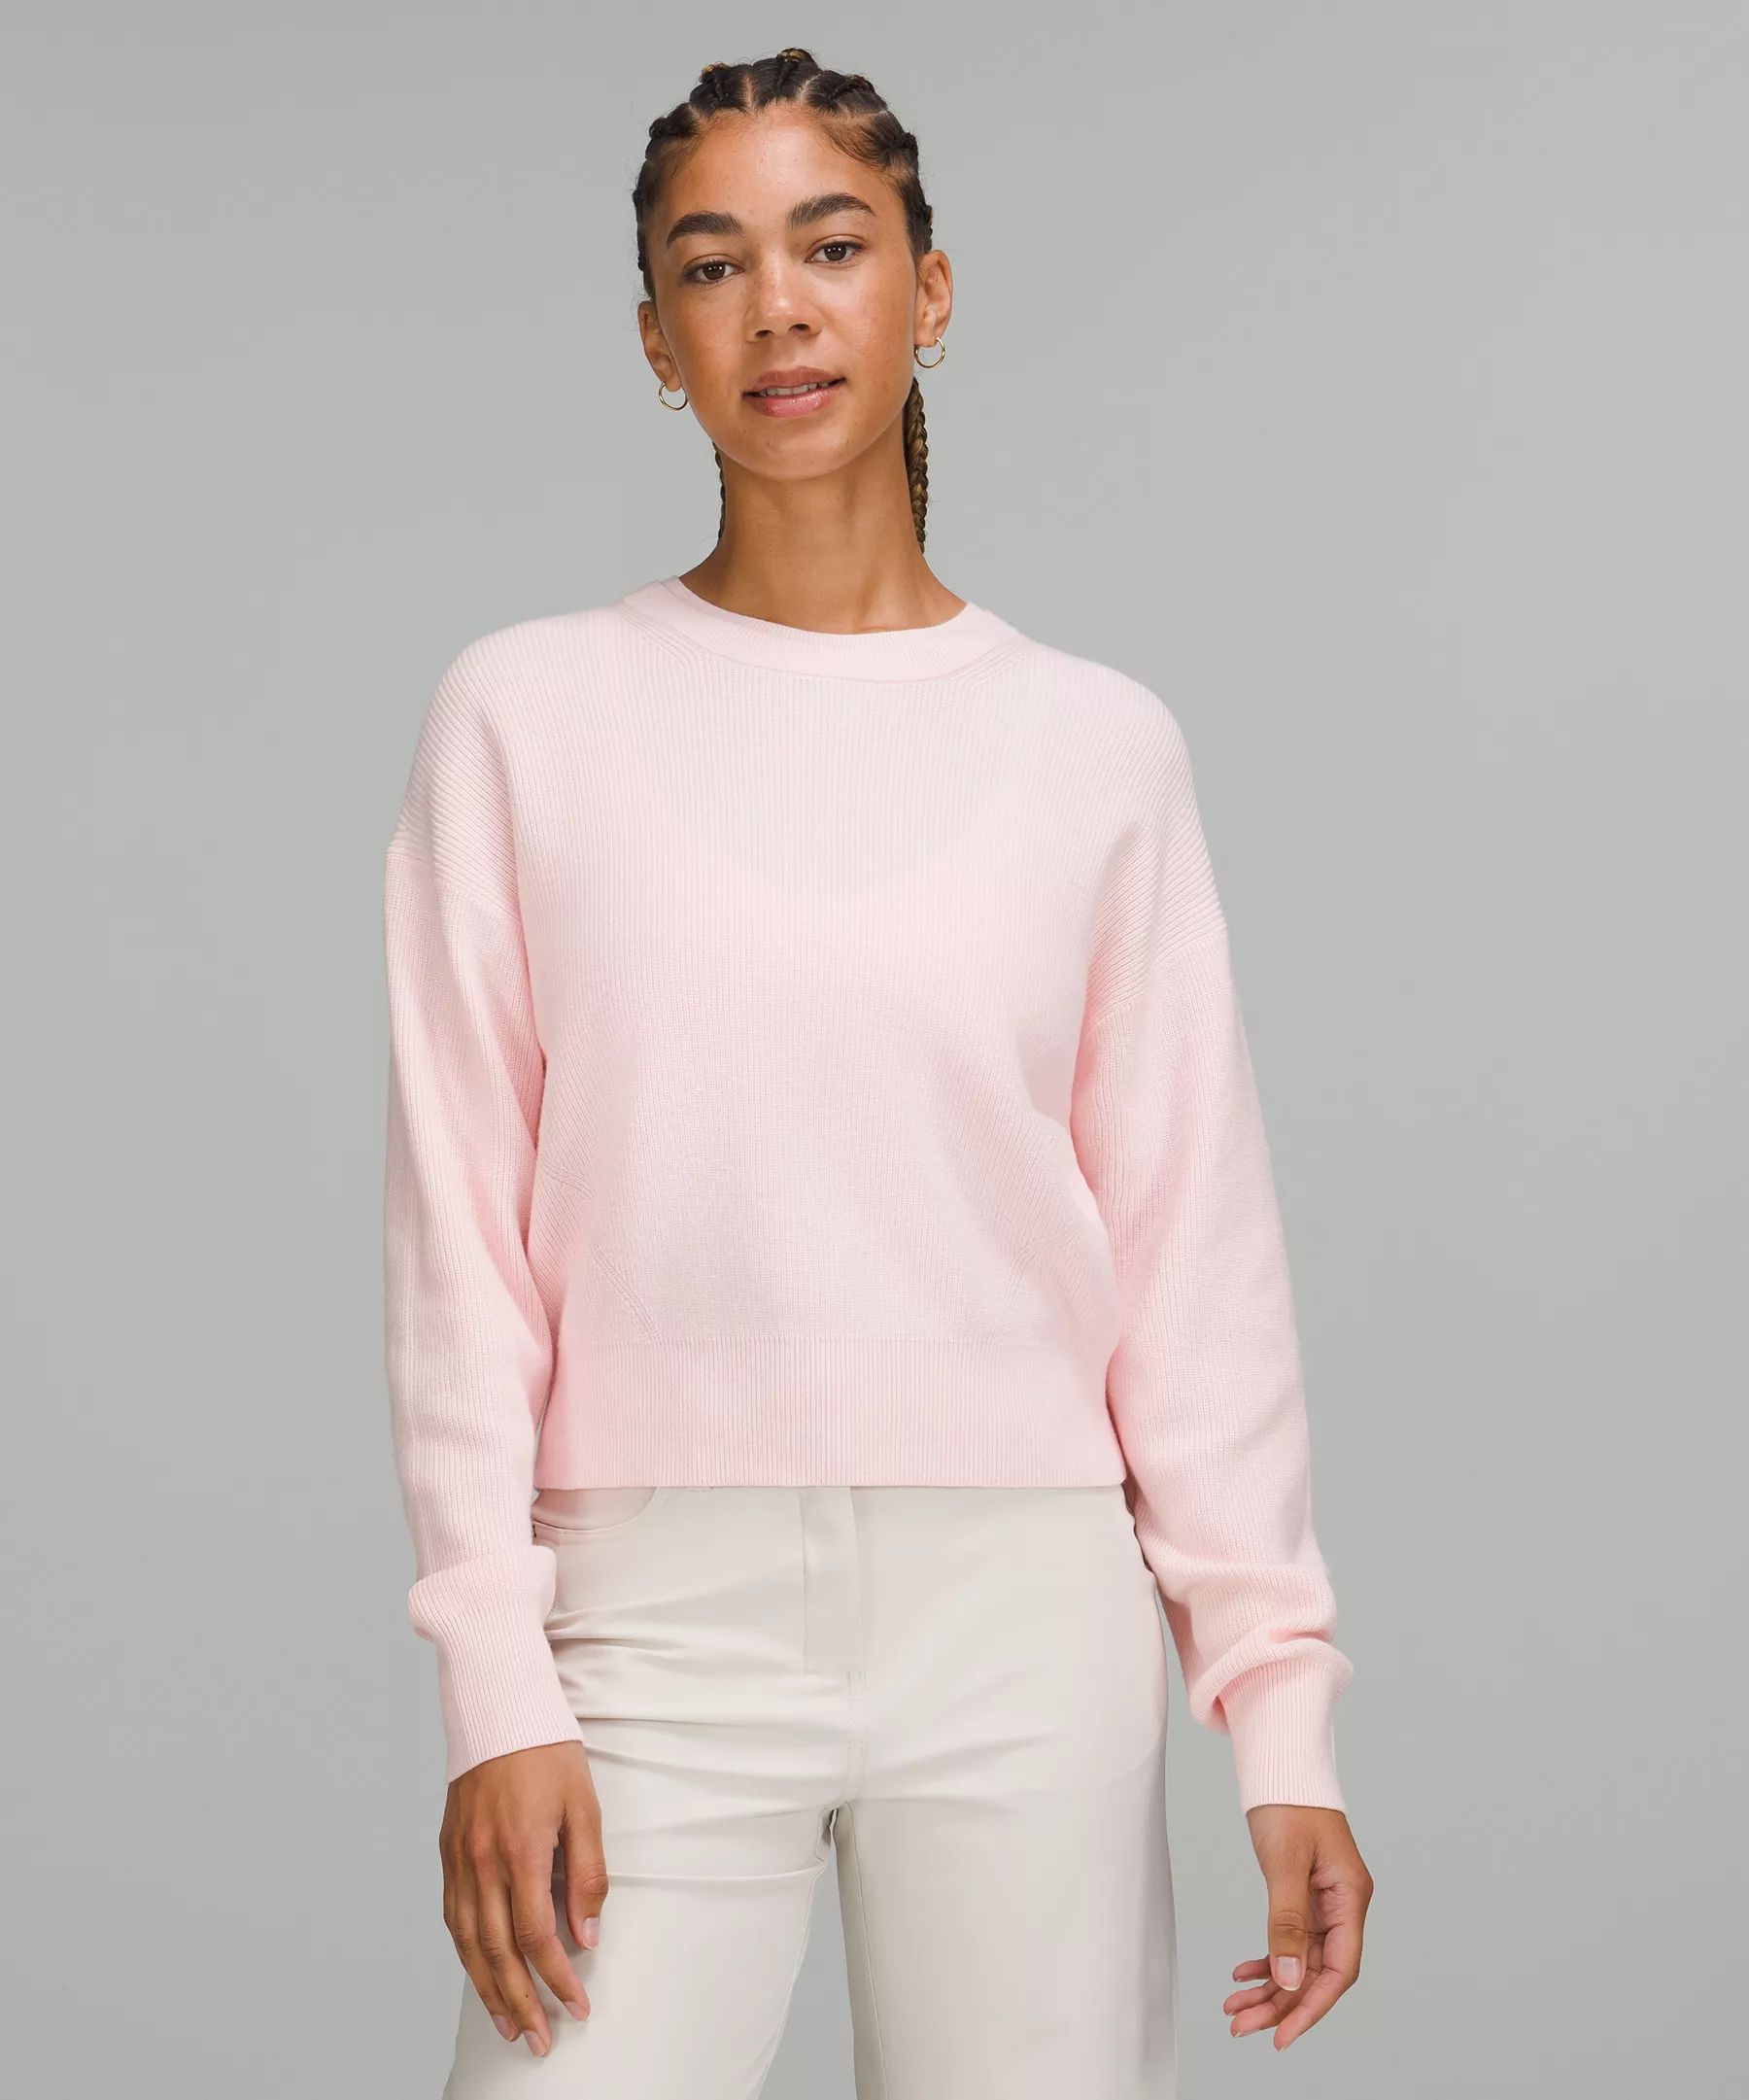 Waist Length Crewneck Sweater | Lululemon (US)